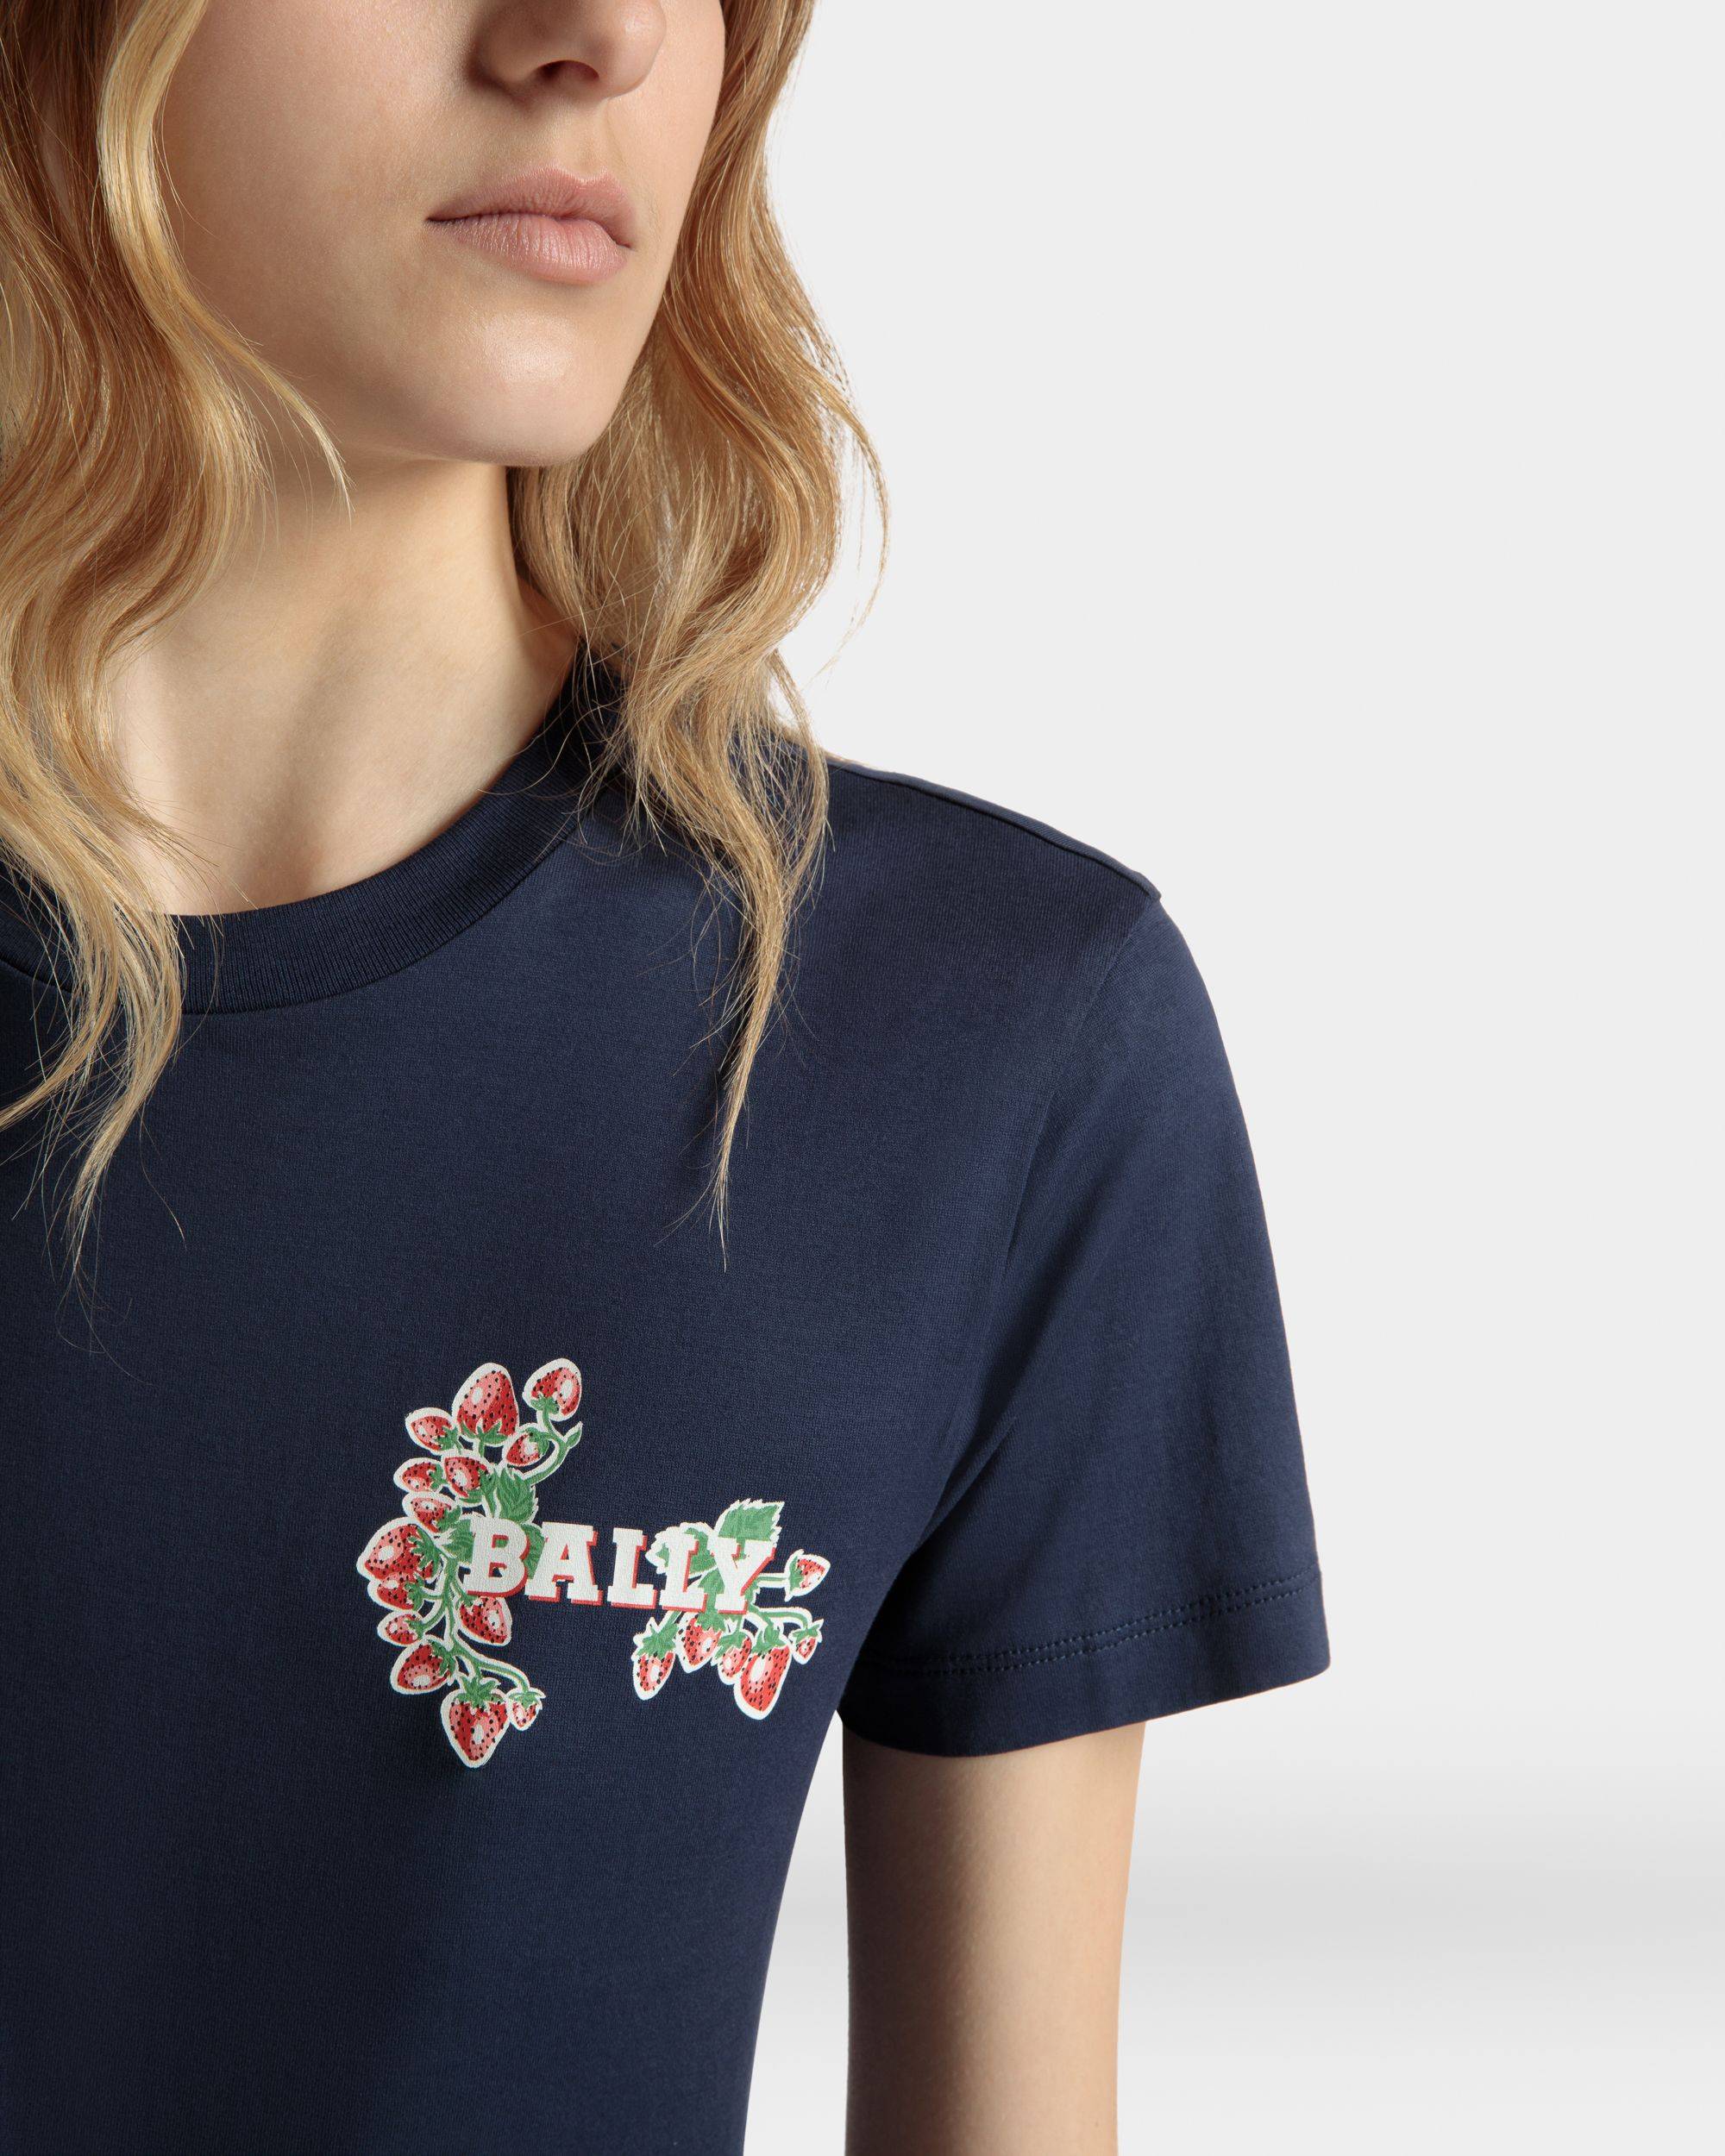 Women's T-Shirt in Strawberry Print Cotton | Bally | On Model Detail